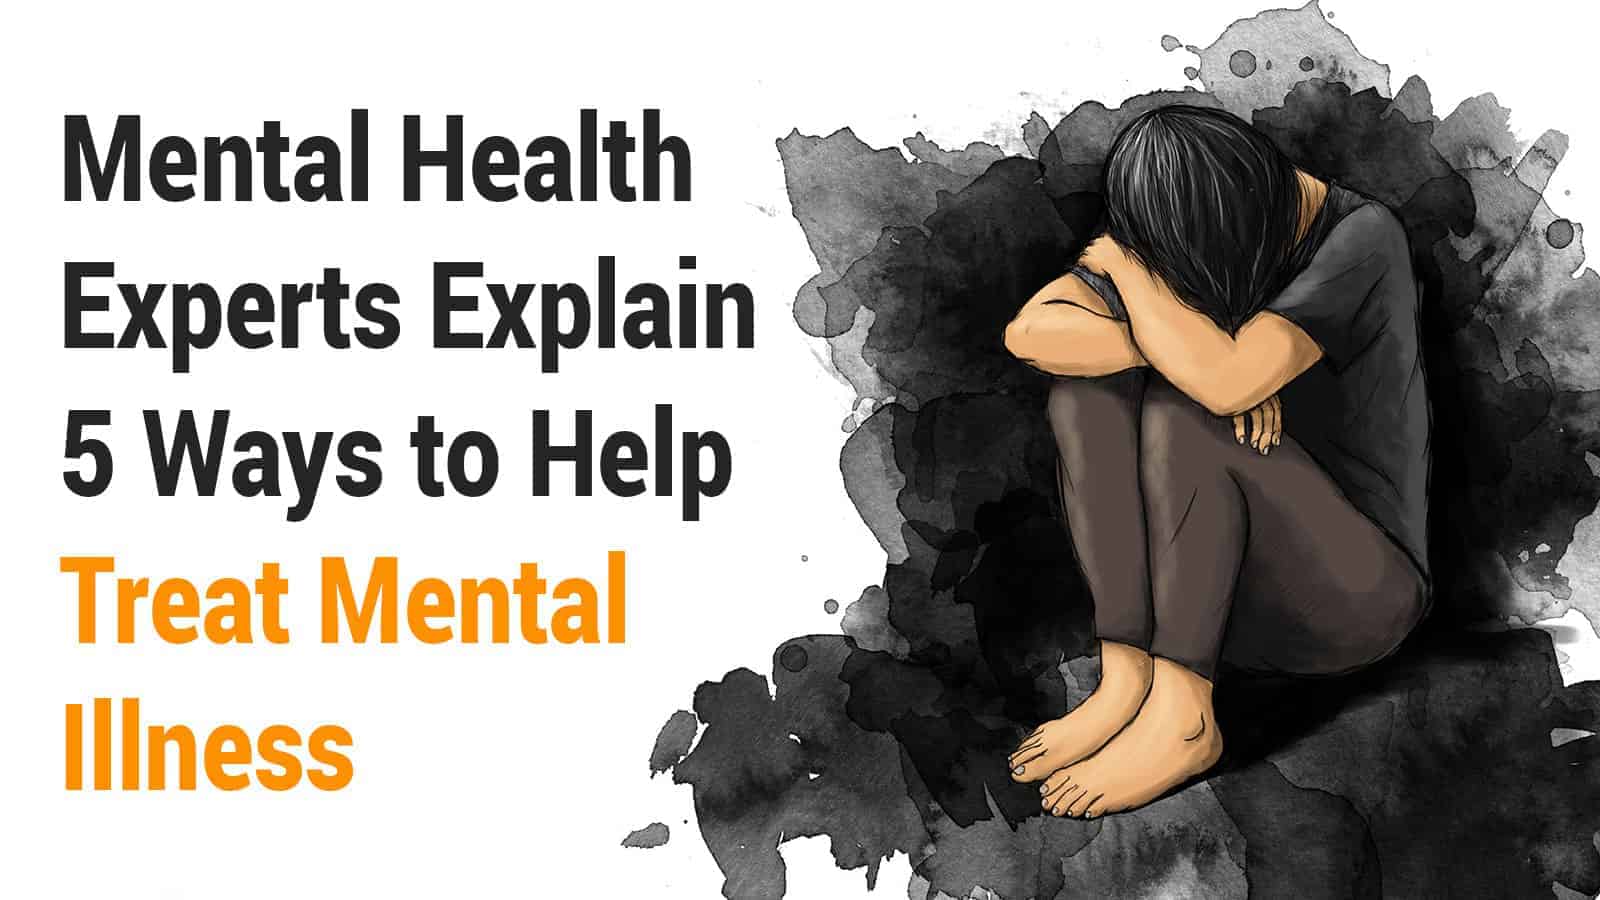 Mental Health Experts Explain 5 Ways to Help Treat Mental Illness